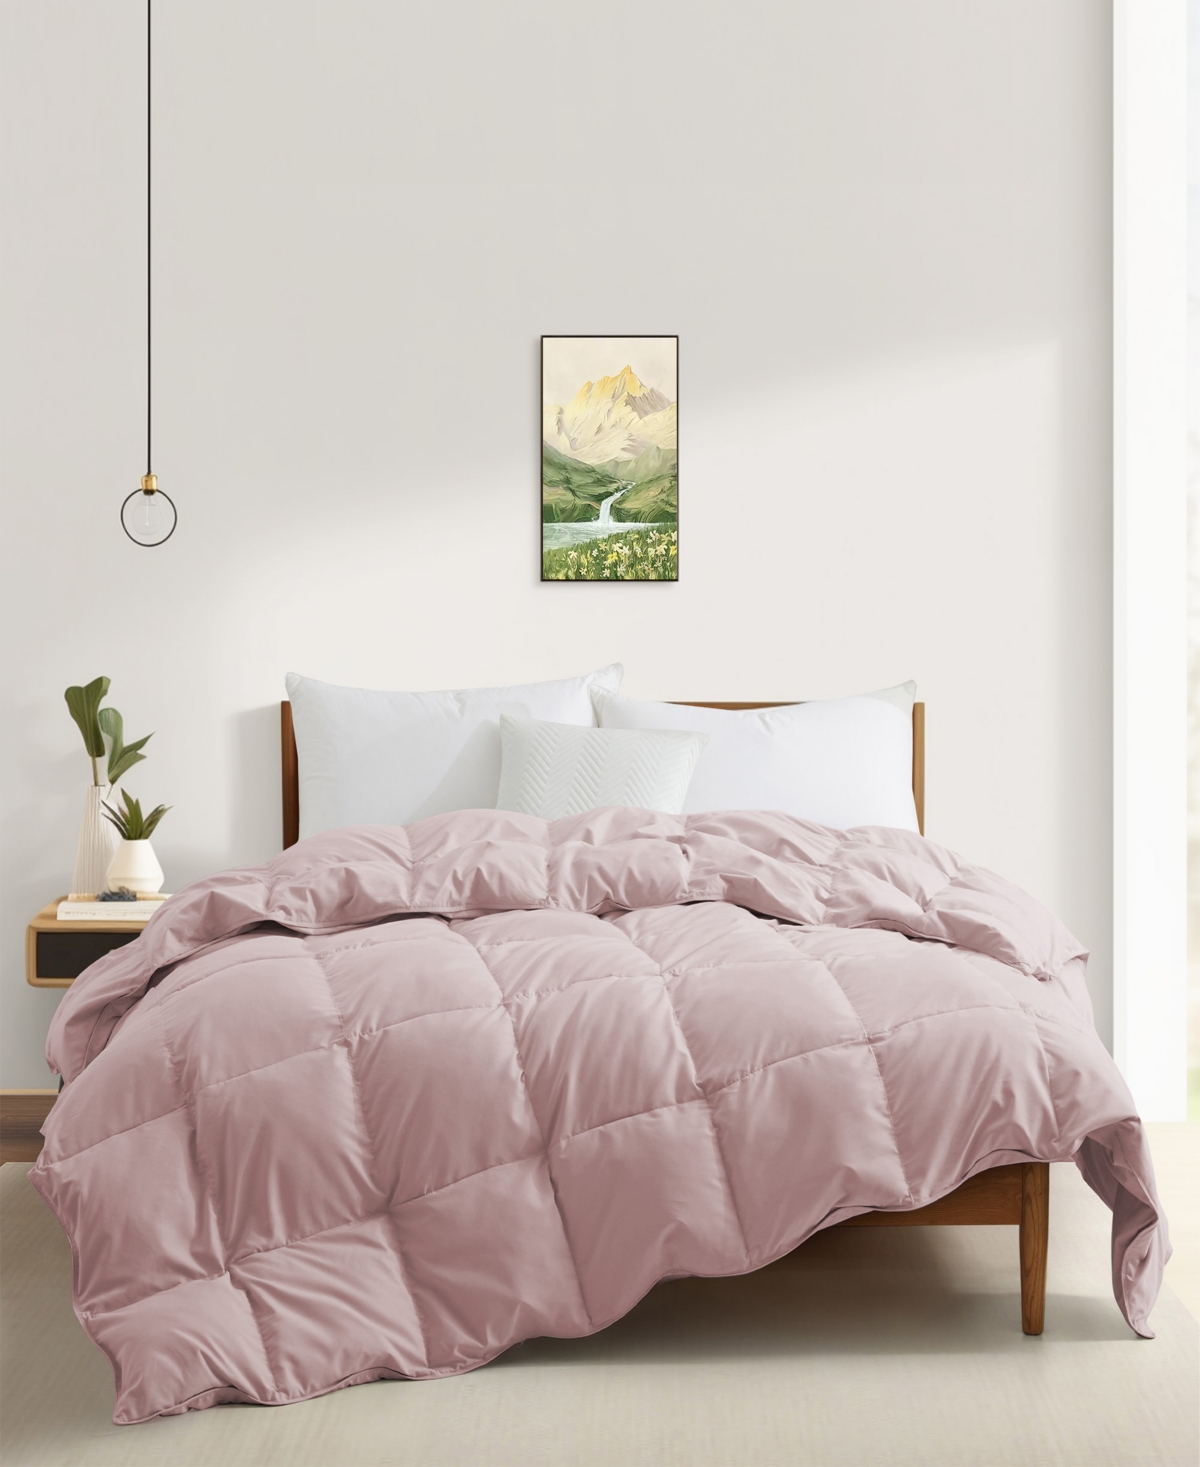 Unikome Lightweight White Goose Down Feather Fiber Comforter, California King In Pink